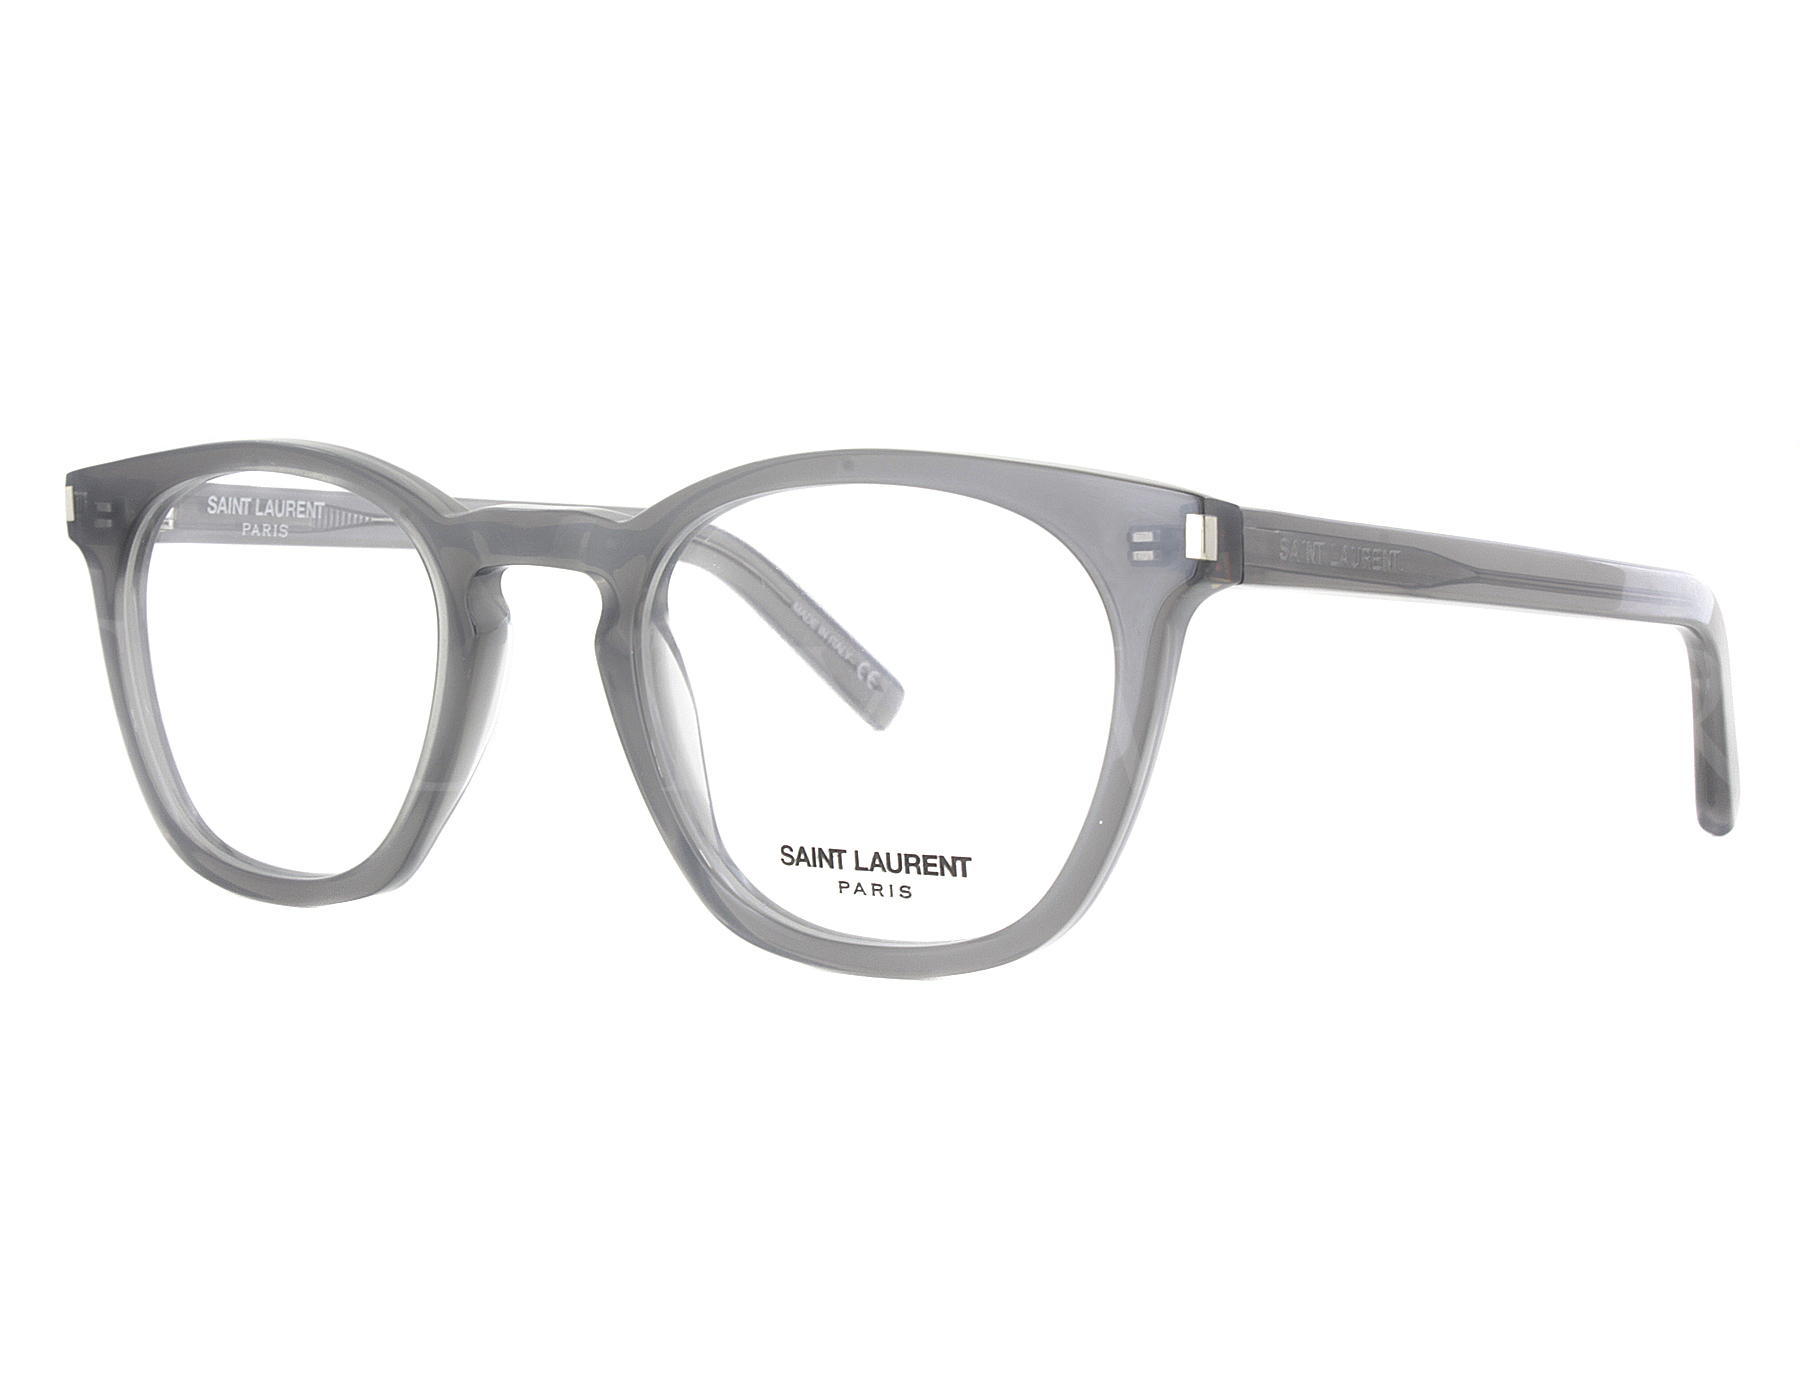 NEW Yves Saint Laurent SL30 003 49mm Grey Optical Eyeglasses Frames ...